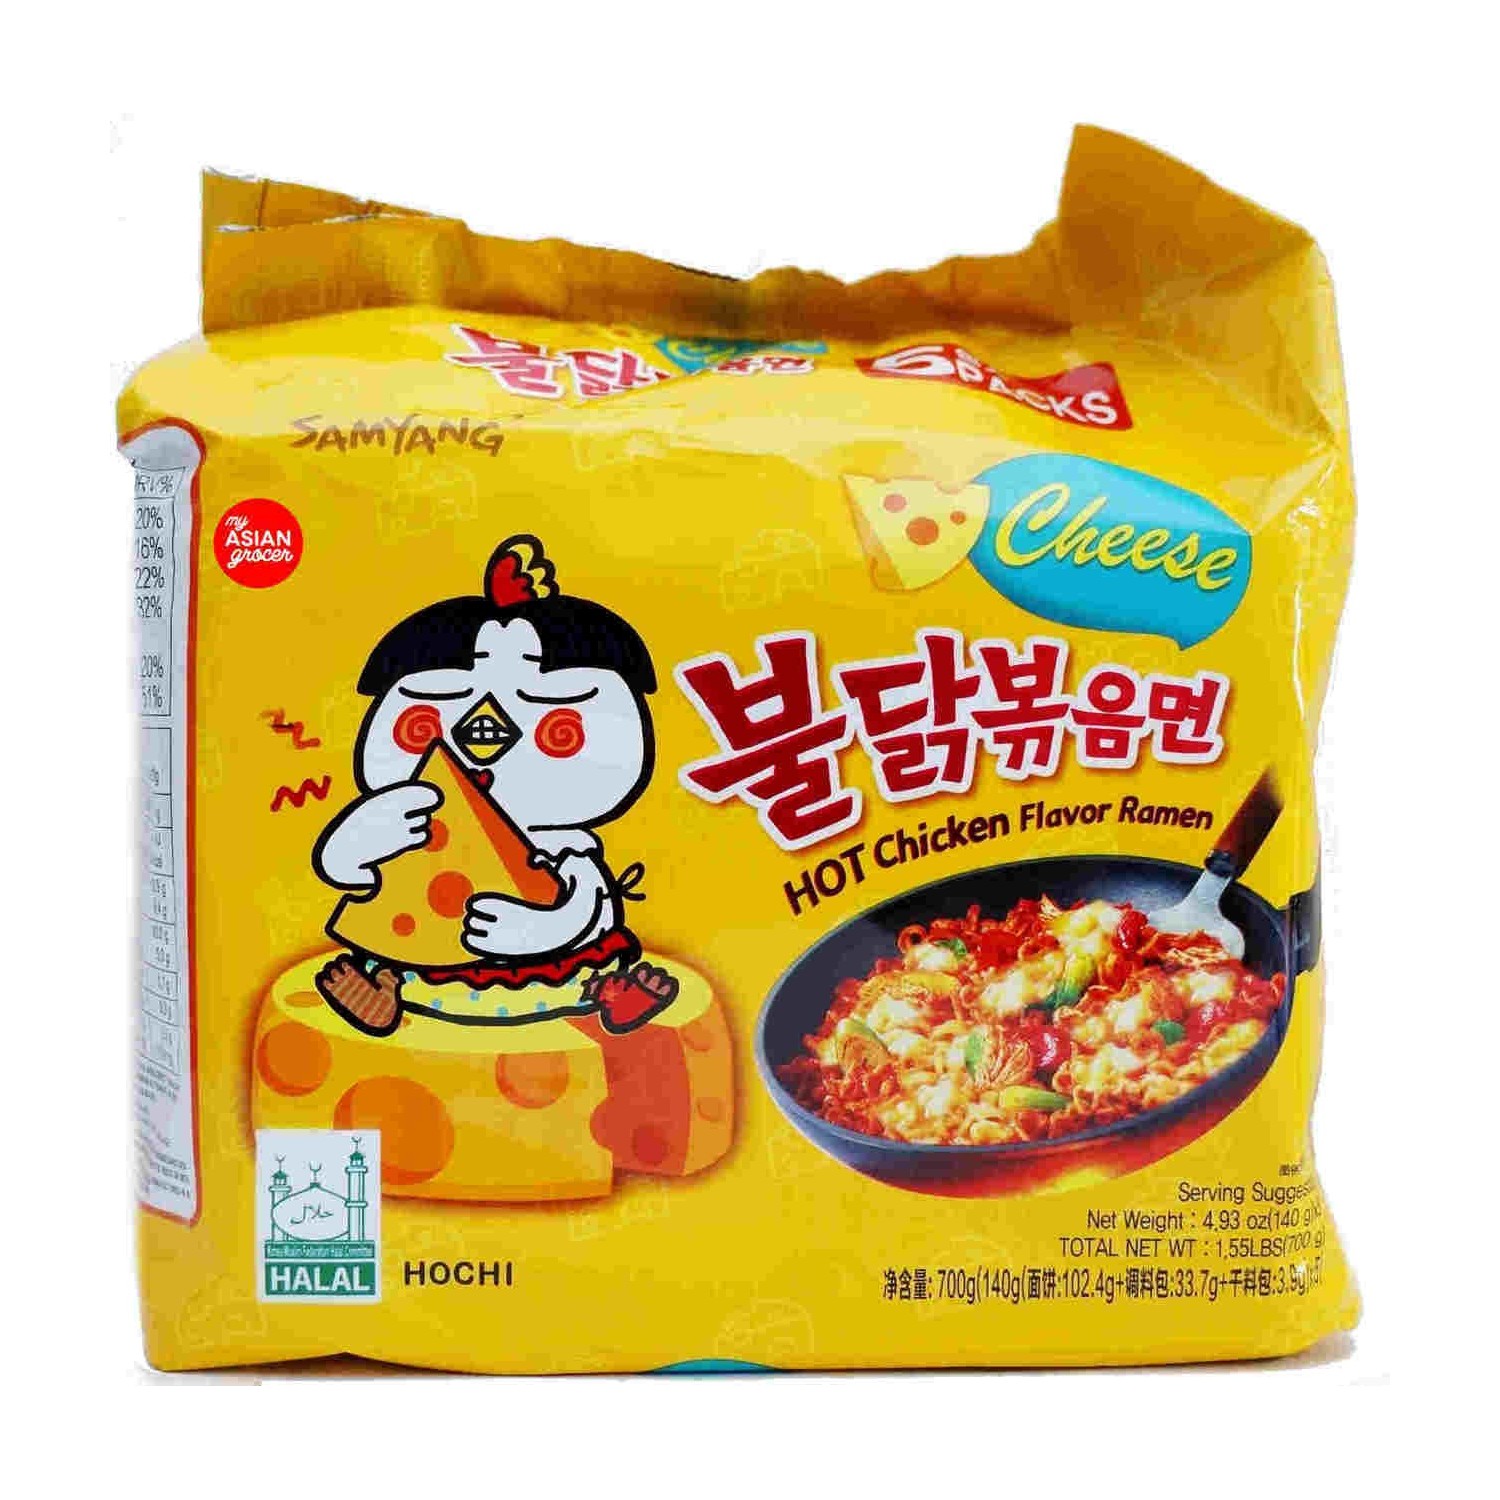 Samyung Hot Chicken Flavor with cheese (5 pack)